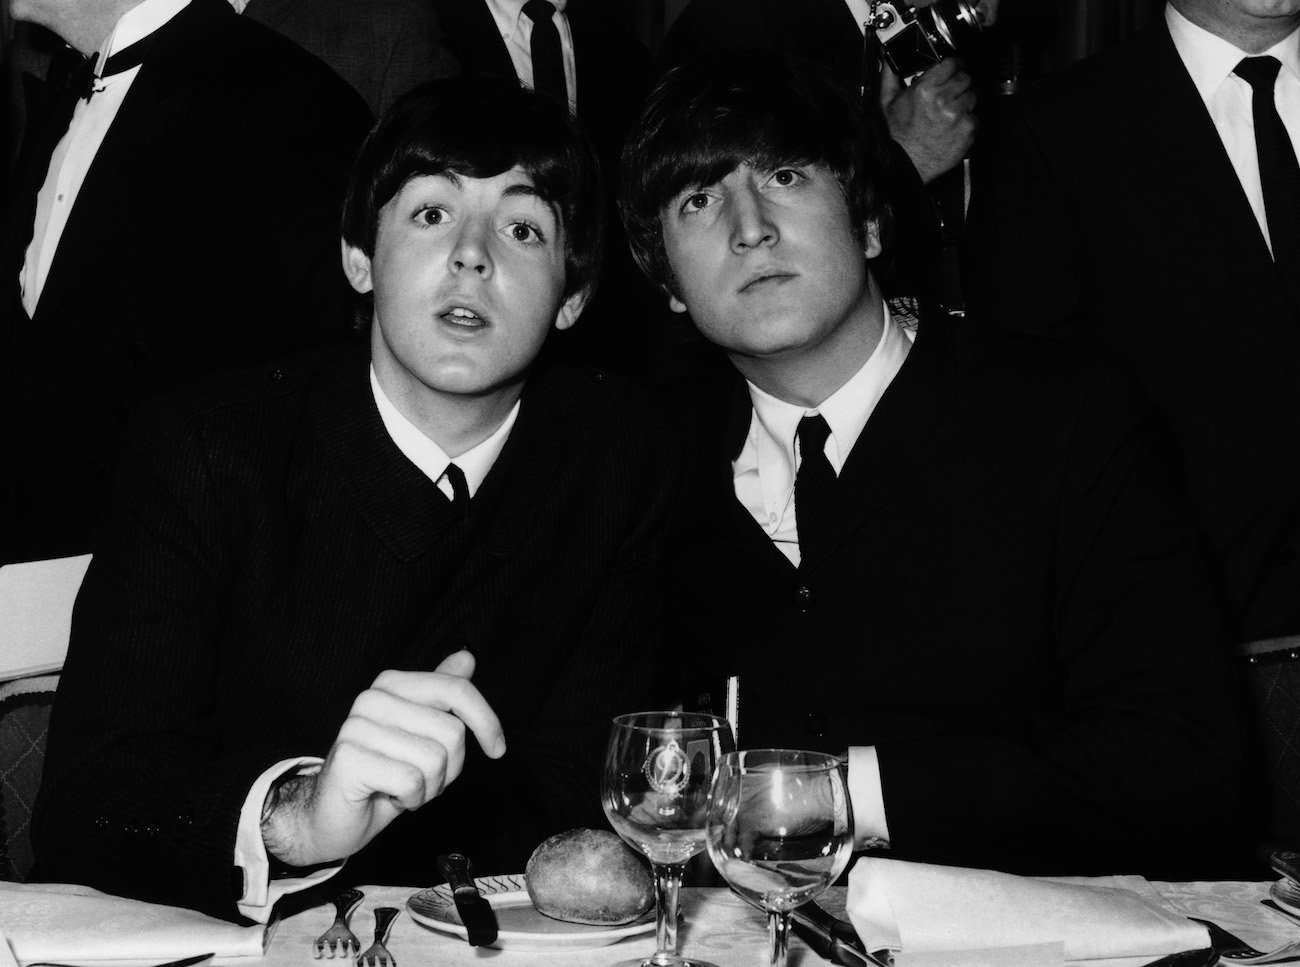 Paul McCartney and John Lennon at the Variety Club Showbusiness Awards, 1964.